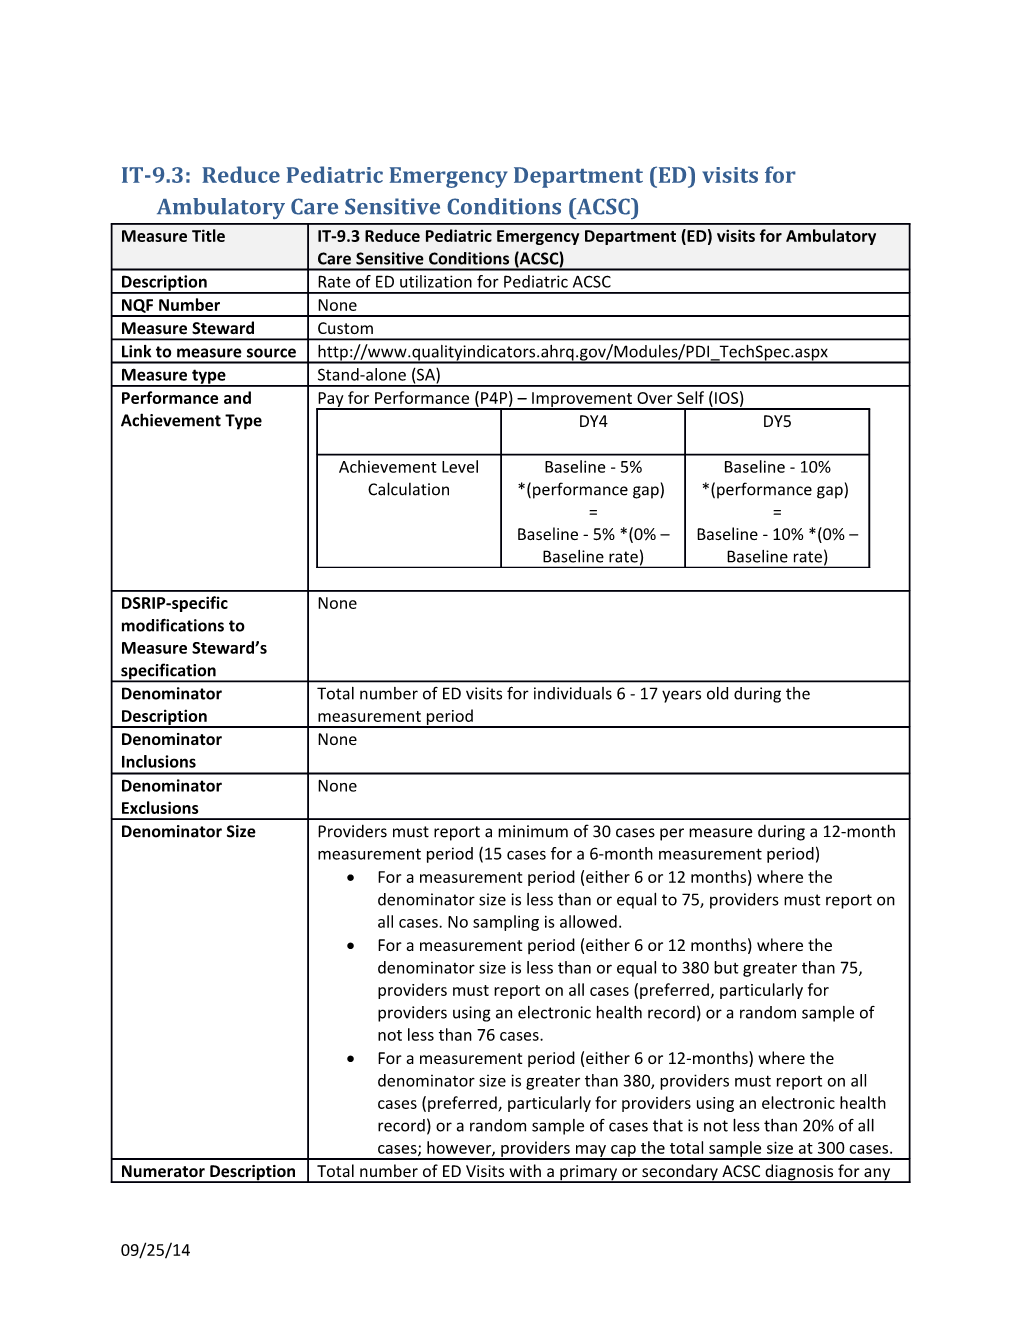 IT-9.3: Reduce Pediatric Emergency Department (ED) Visits for Ambulatory Care Sensitive